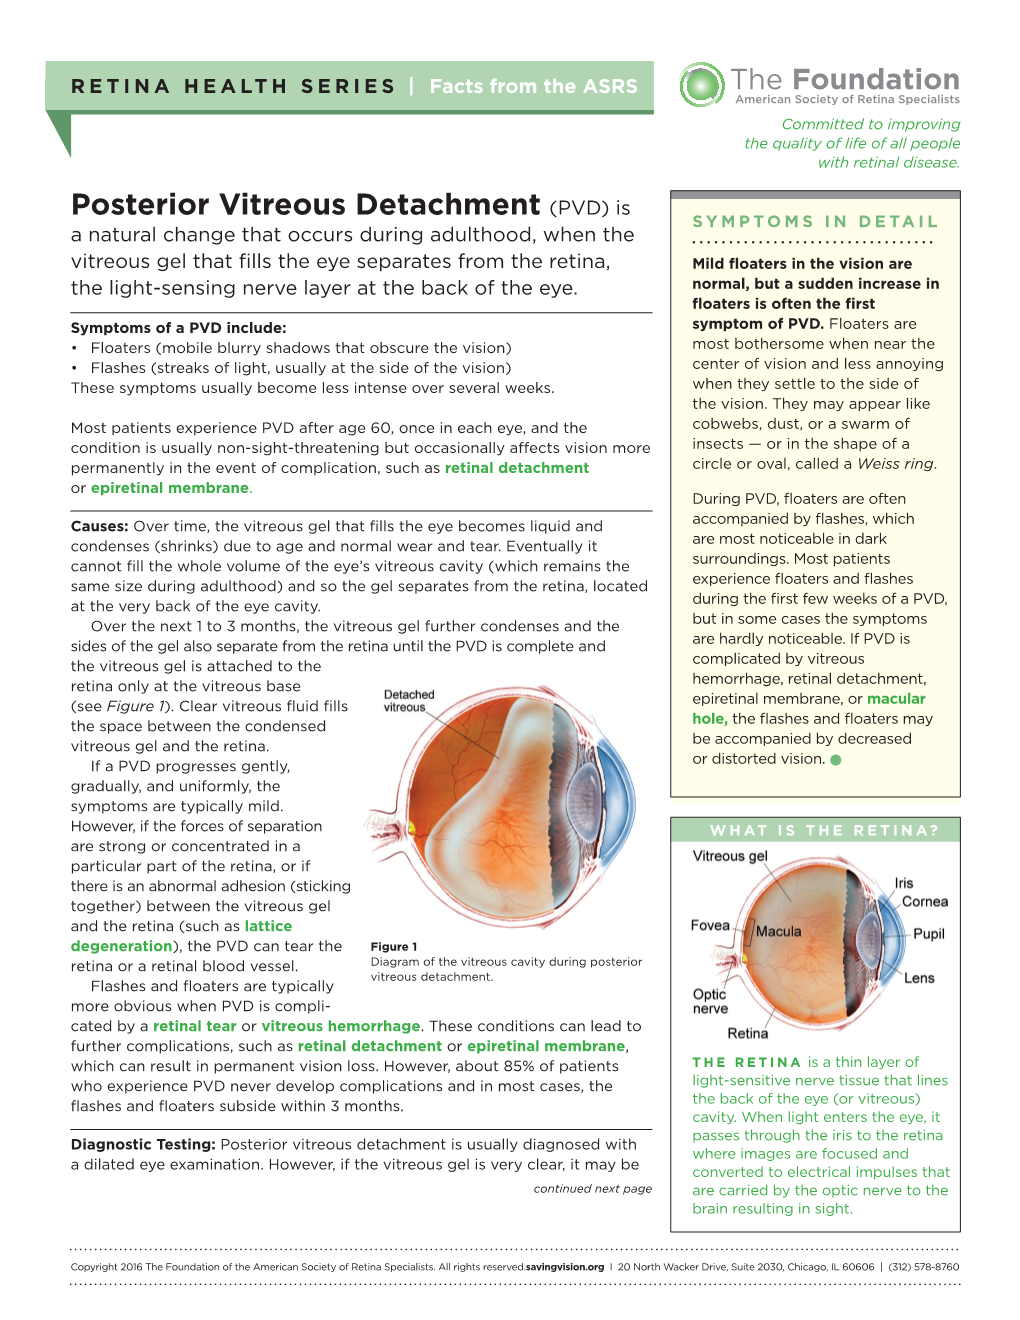 Posterior Vitreous Detachment (PVD) Is